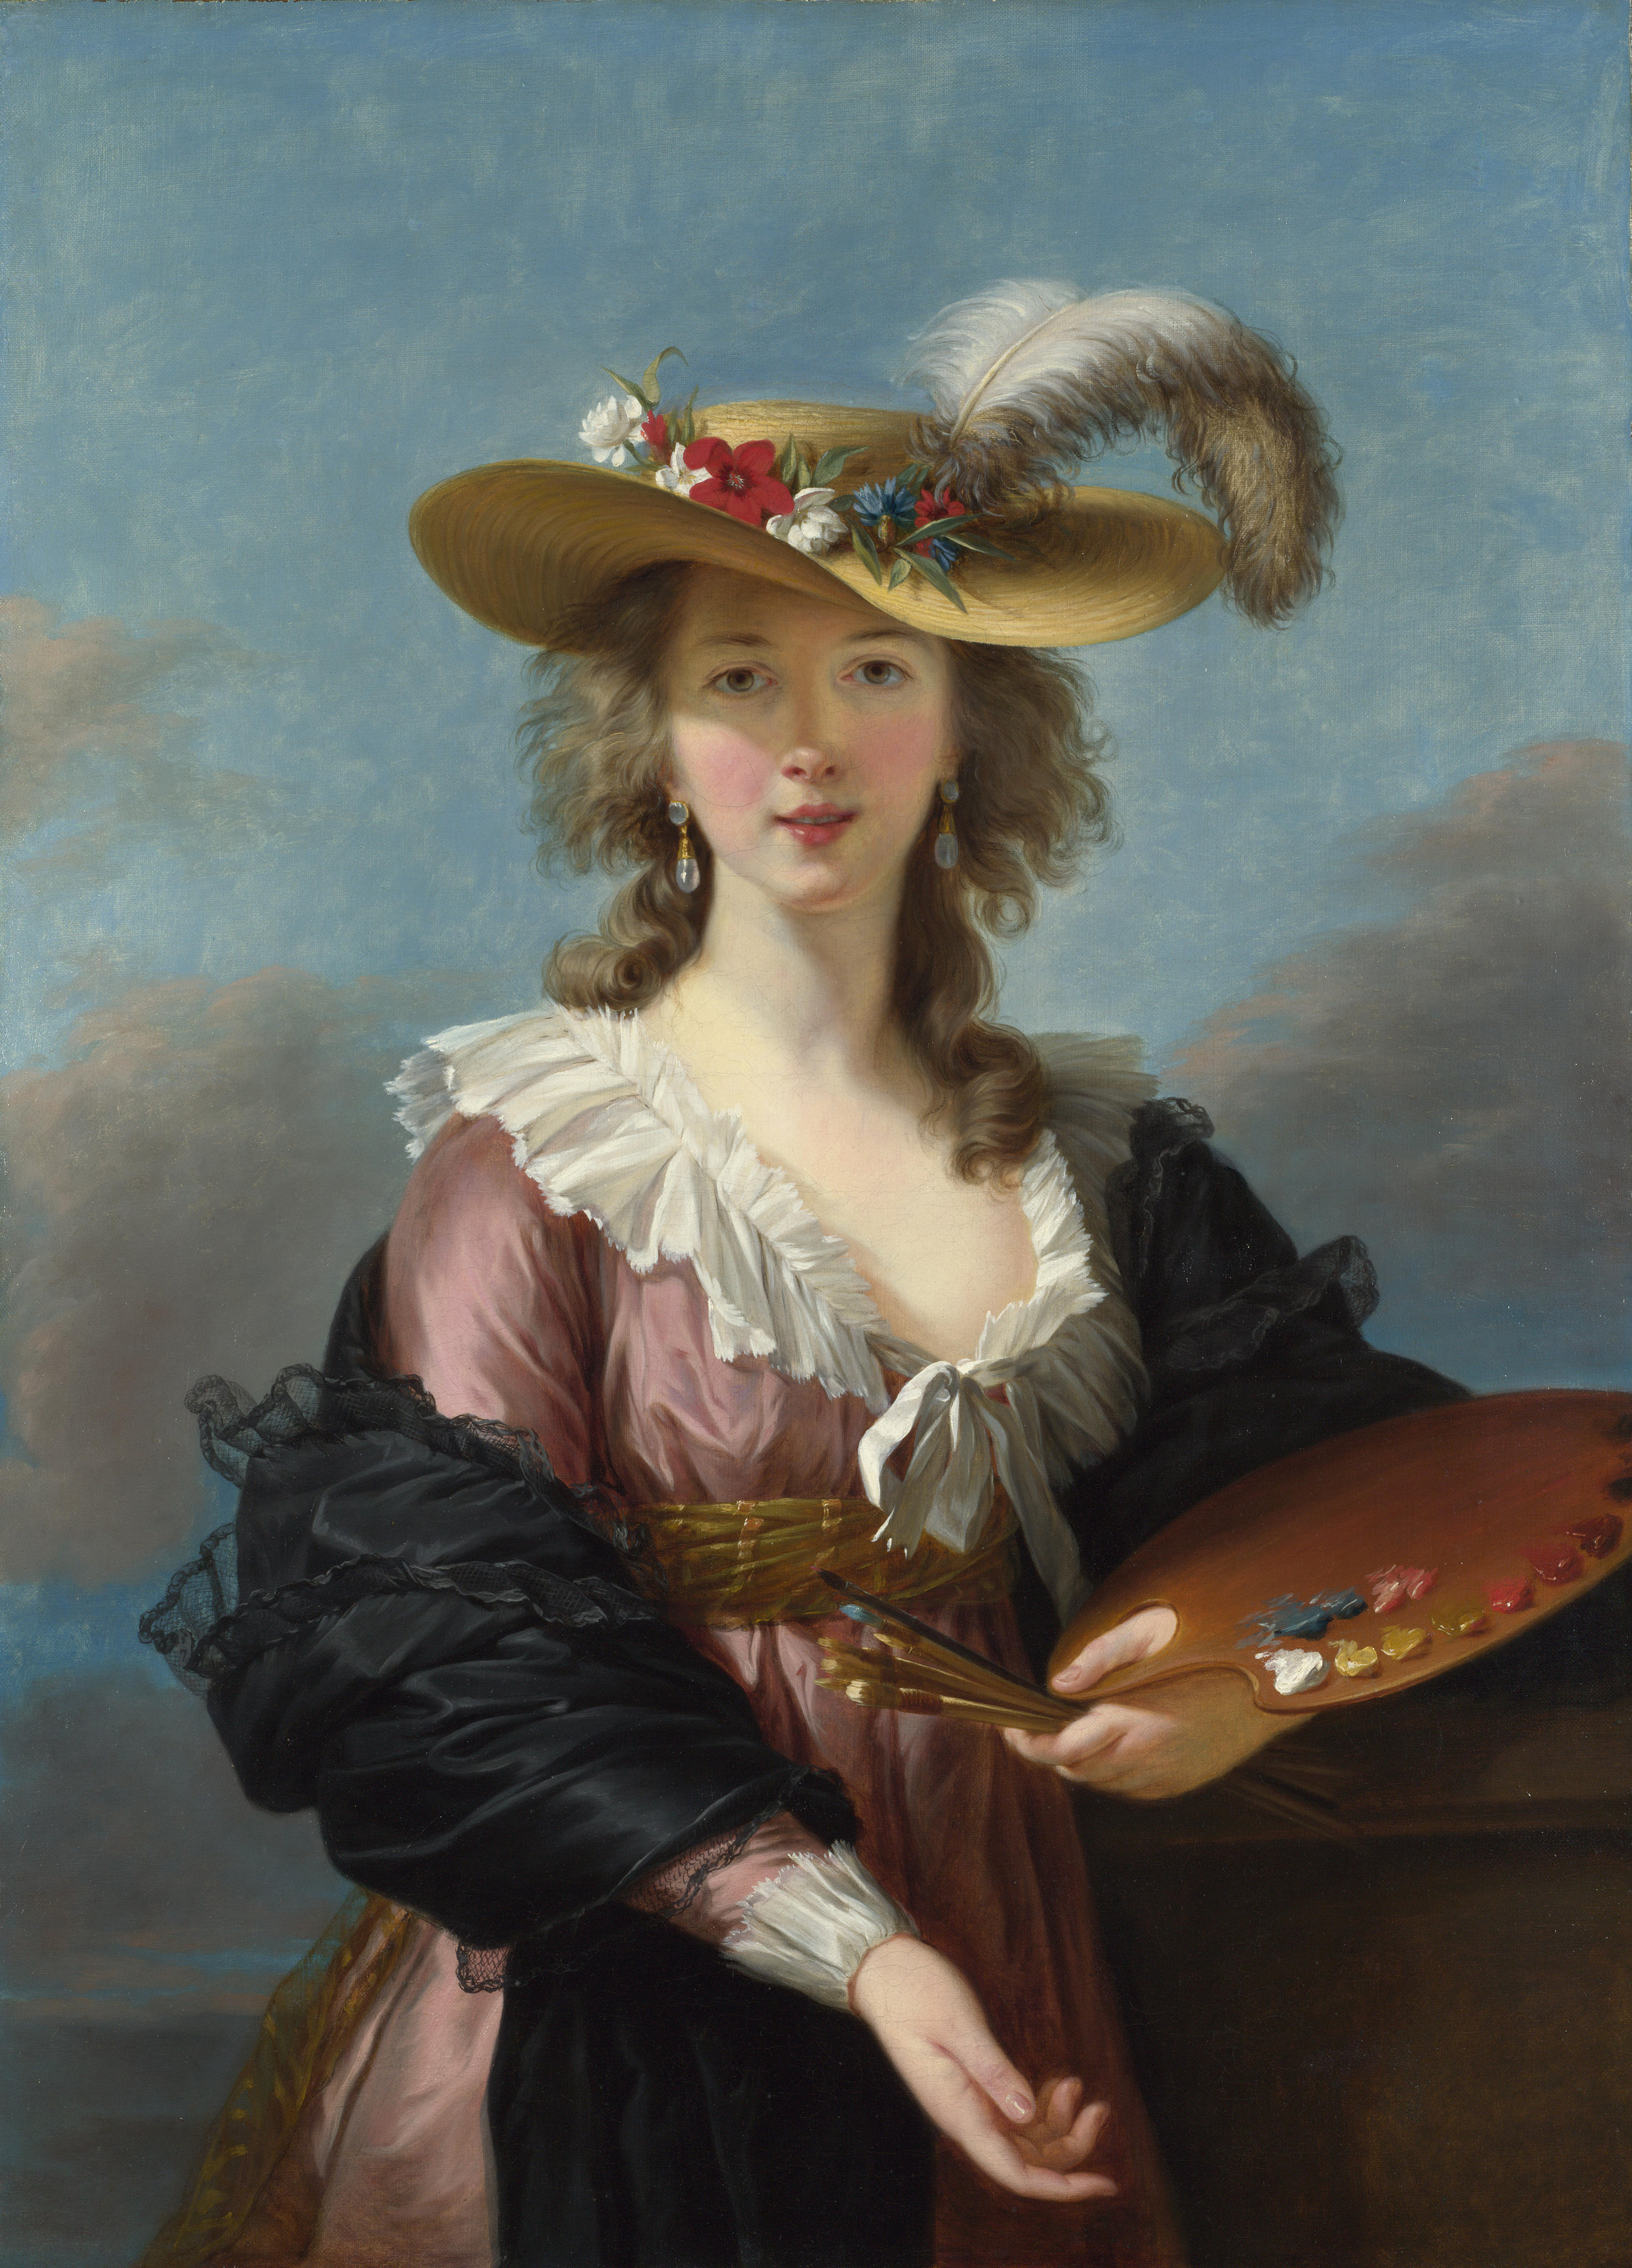 Elisabeth Vigée Lebrun, Self-Portrait, after 1782, oil on canvas, National Gallery, London